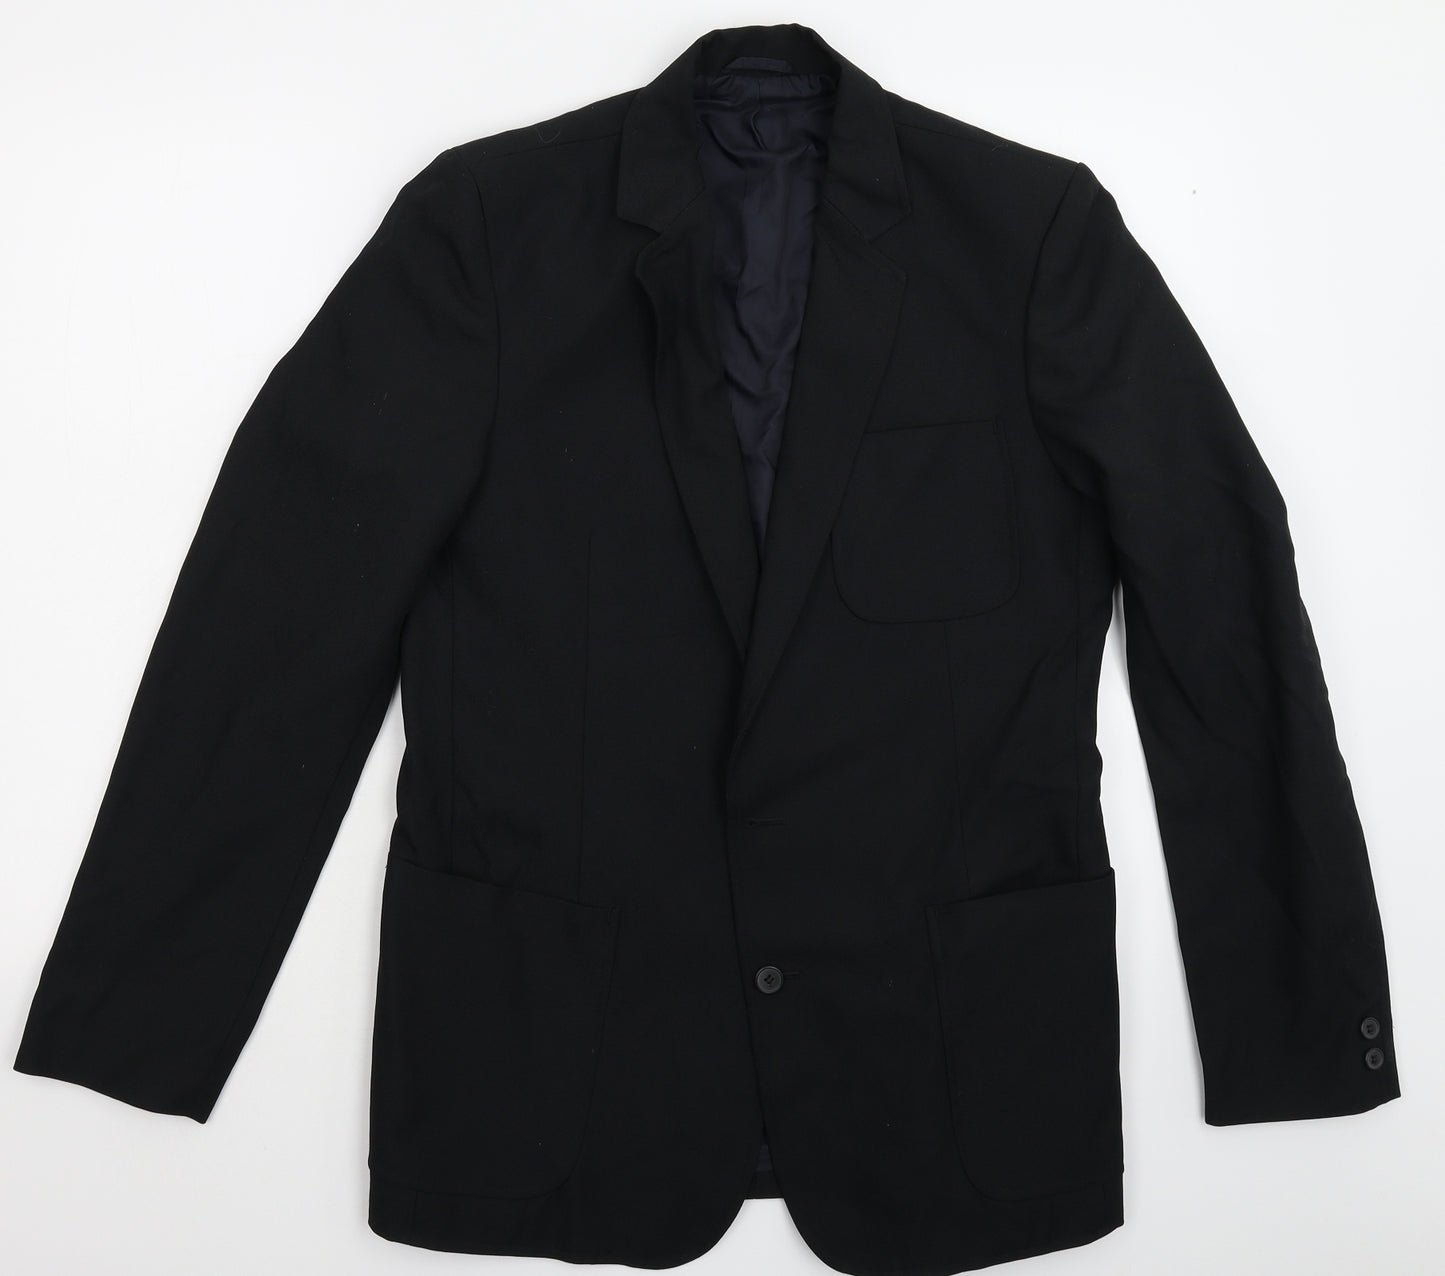 Invicta Womens Black   Jacket Blazer Size 16